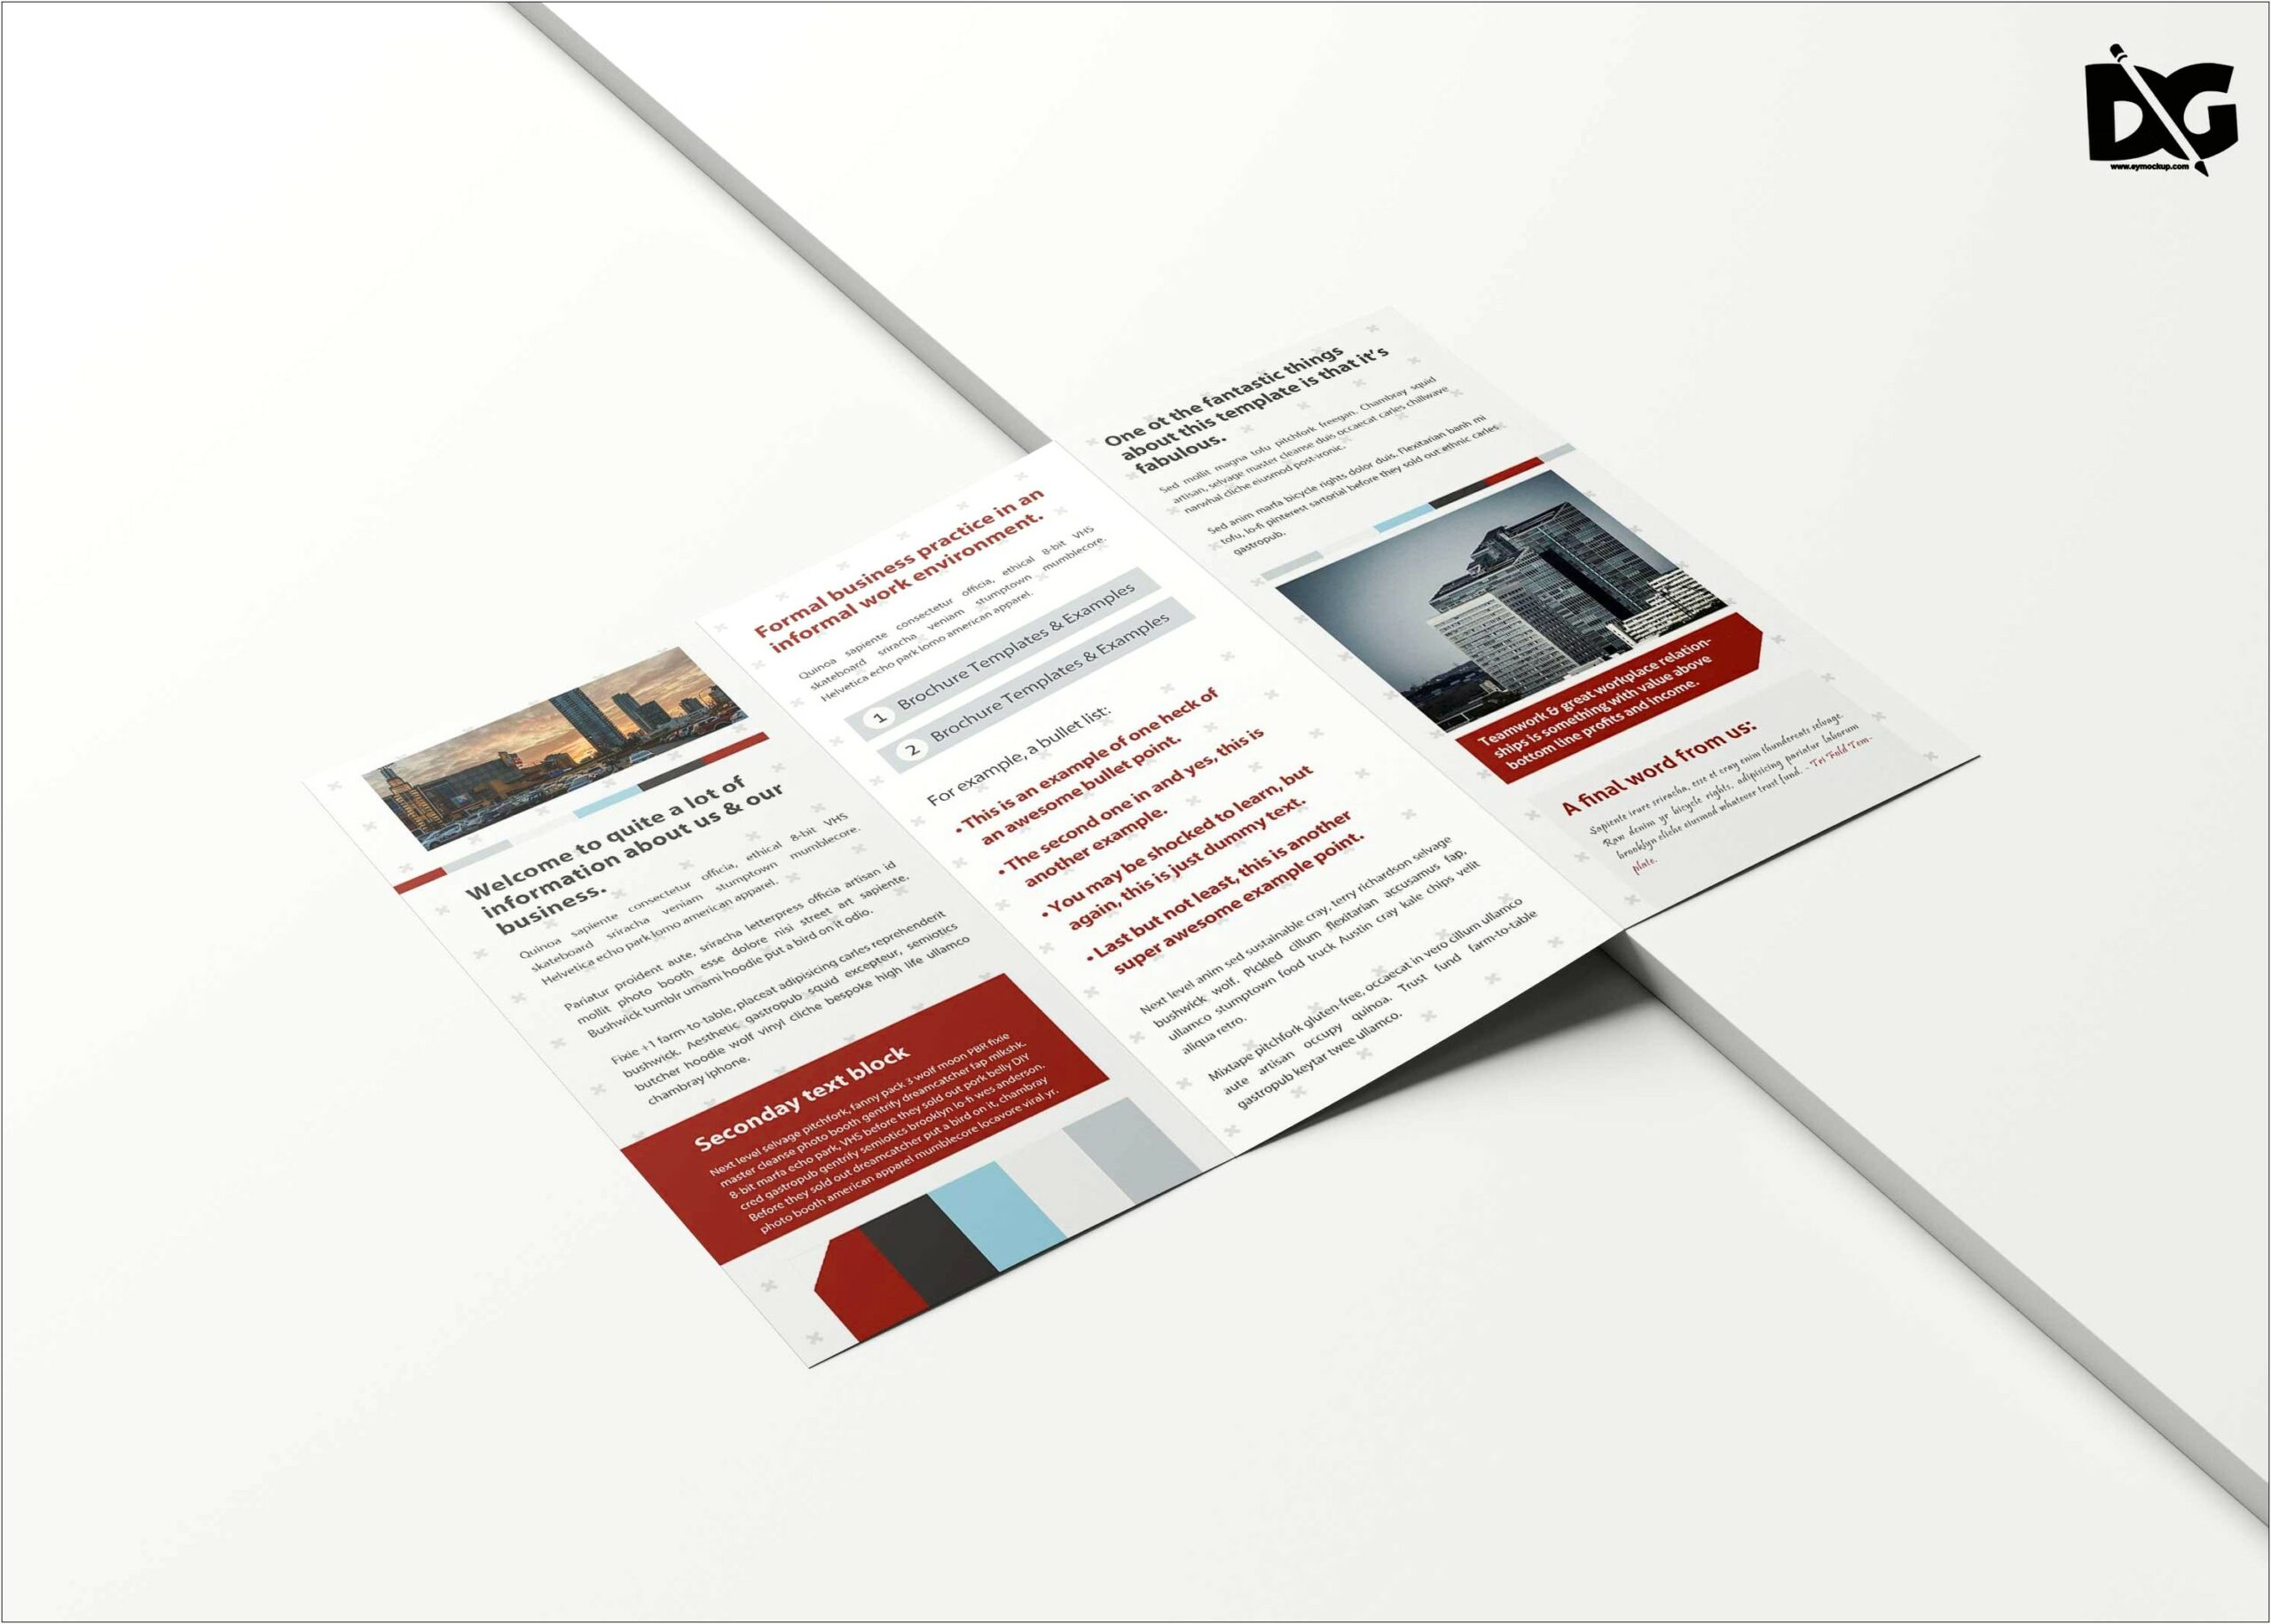 Tri Fold Brochure Template Free Download Word